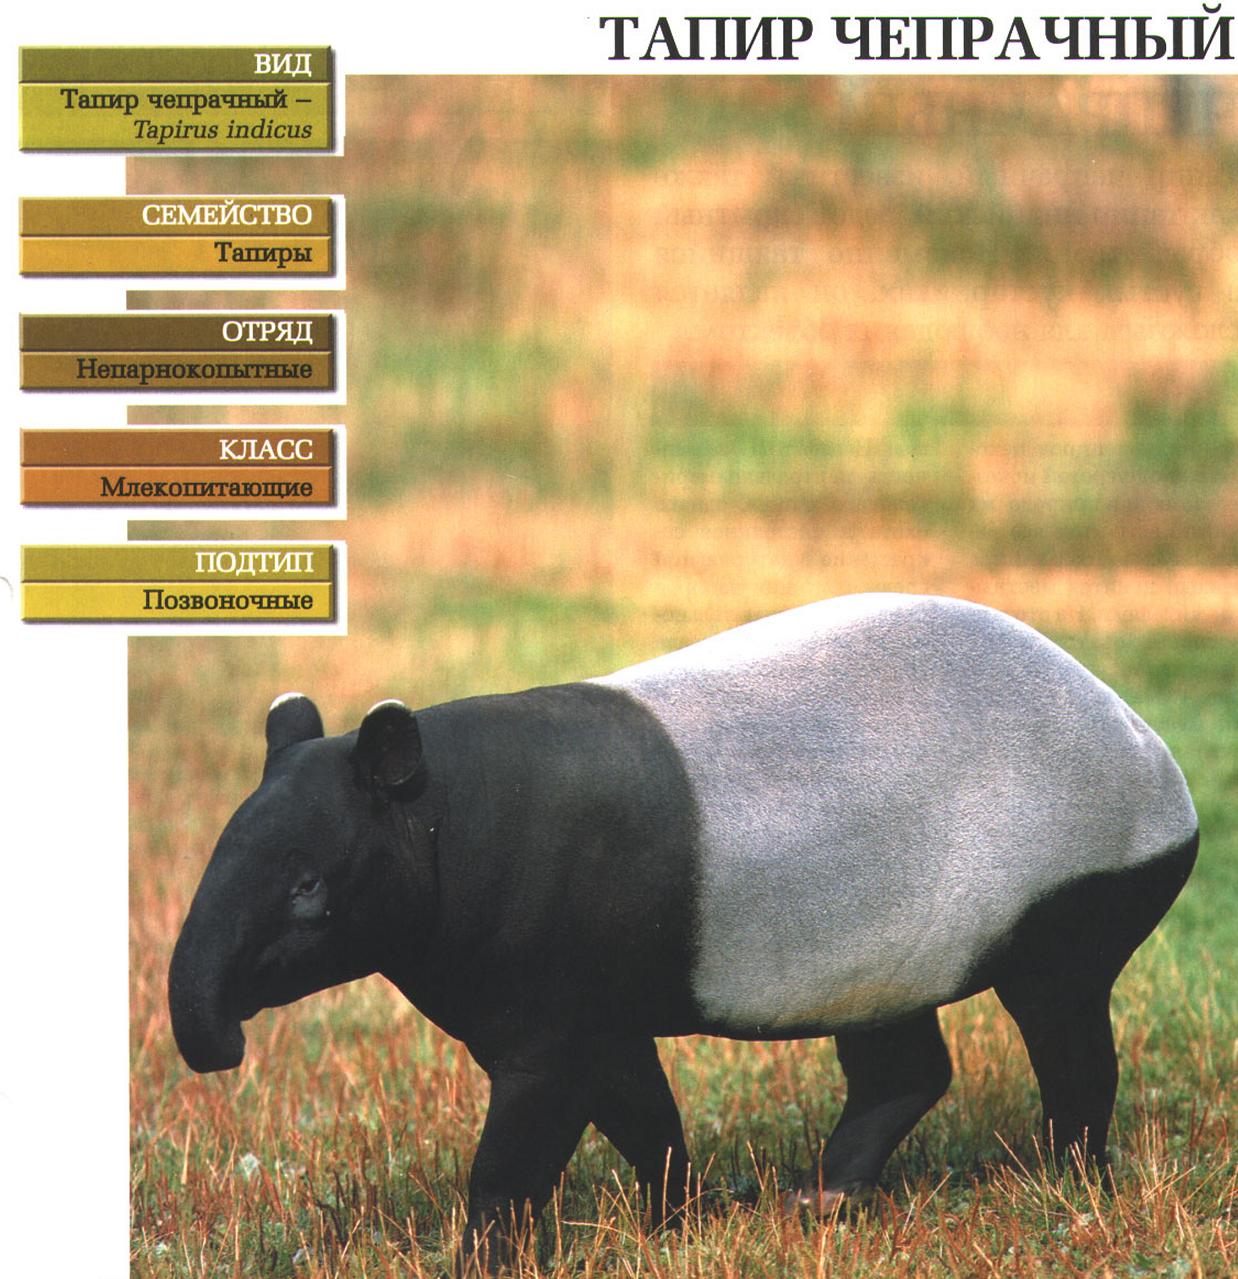 Систематика (научная классификация) тапира чепрачного. Tapirus indicus.